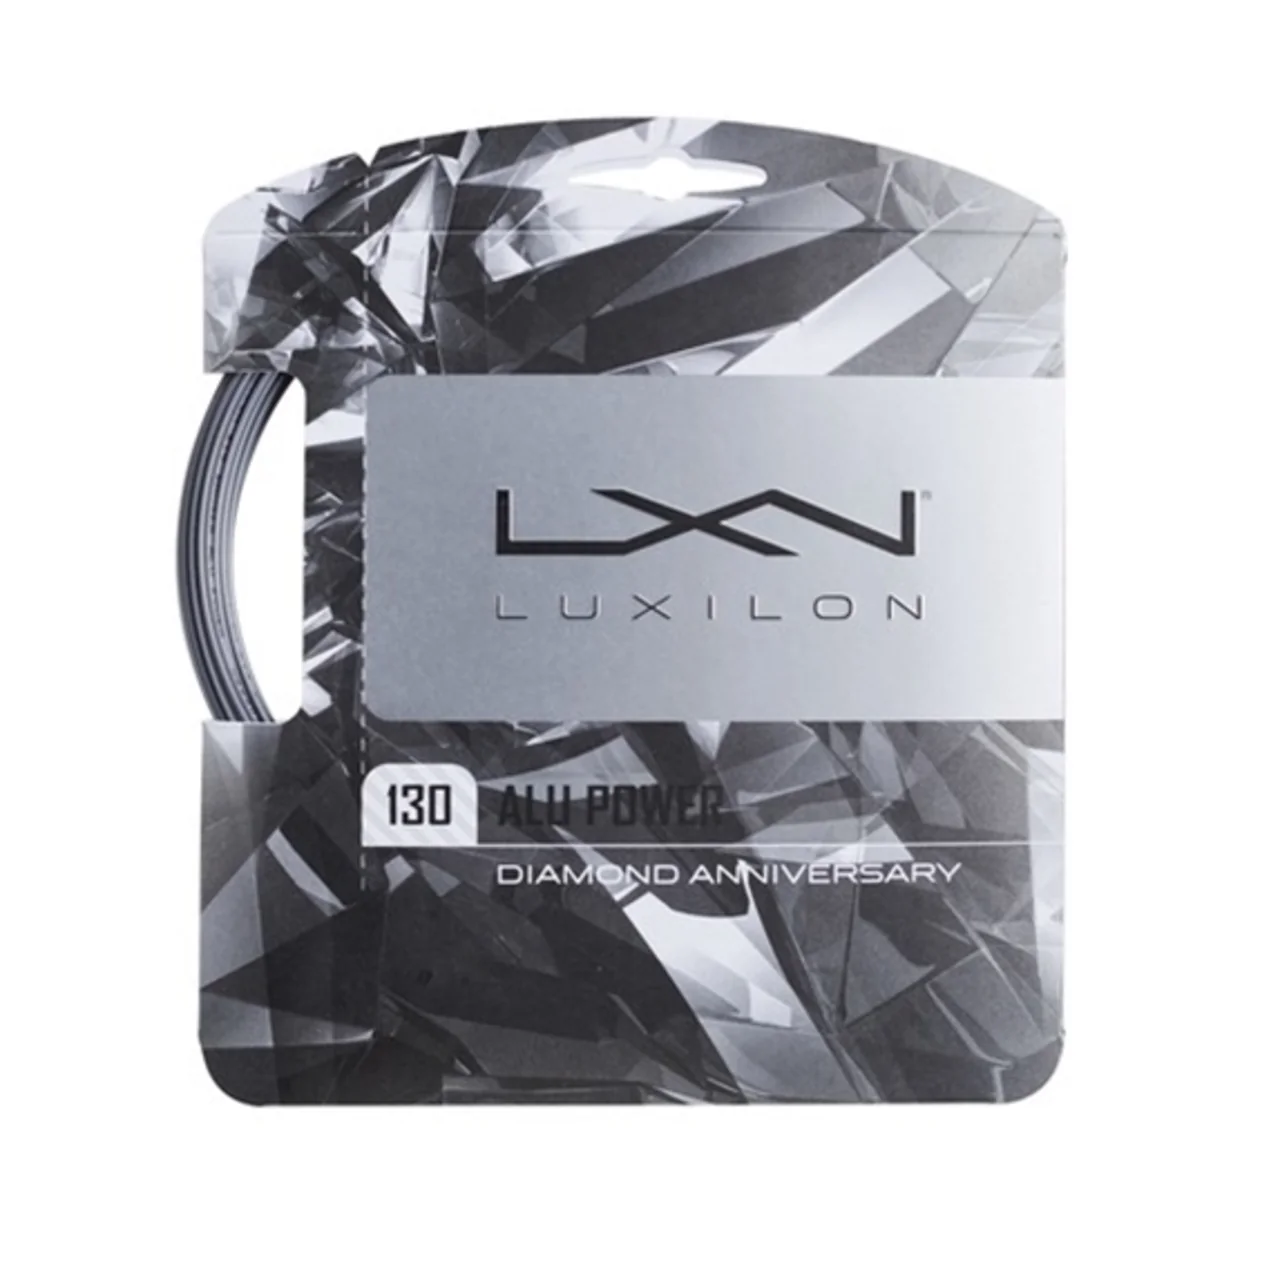 Luxilon Alu Power 60Y Diamond Silver Set